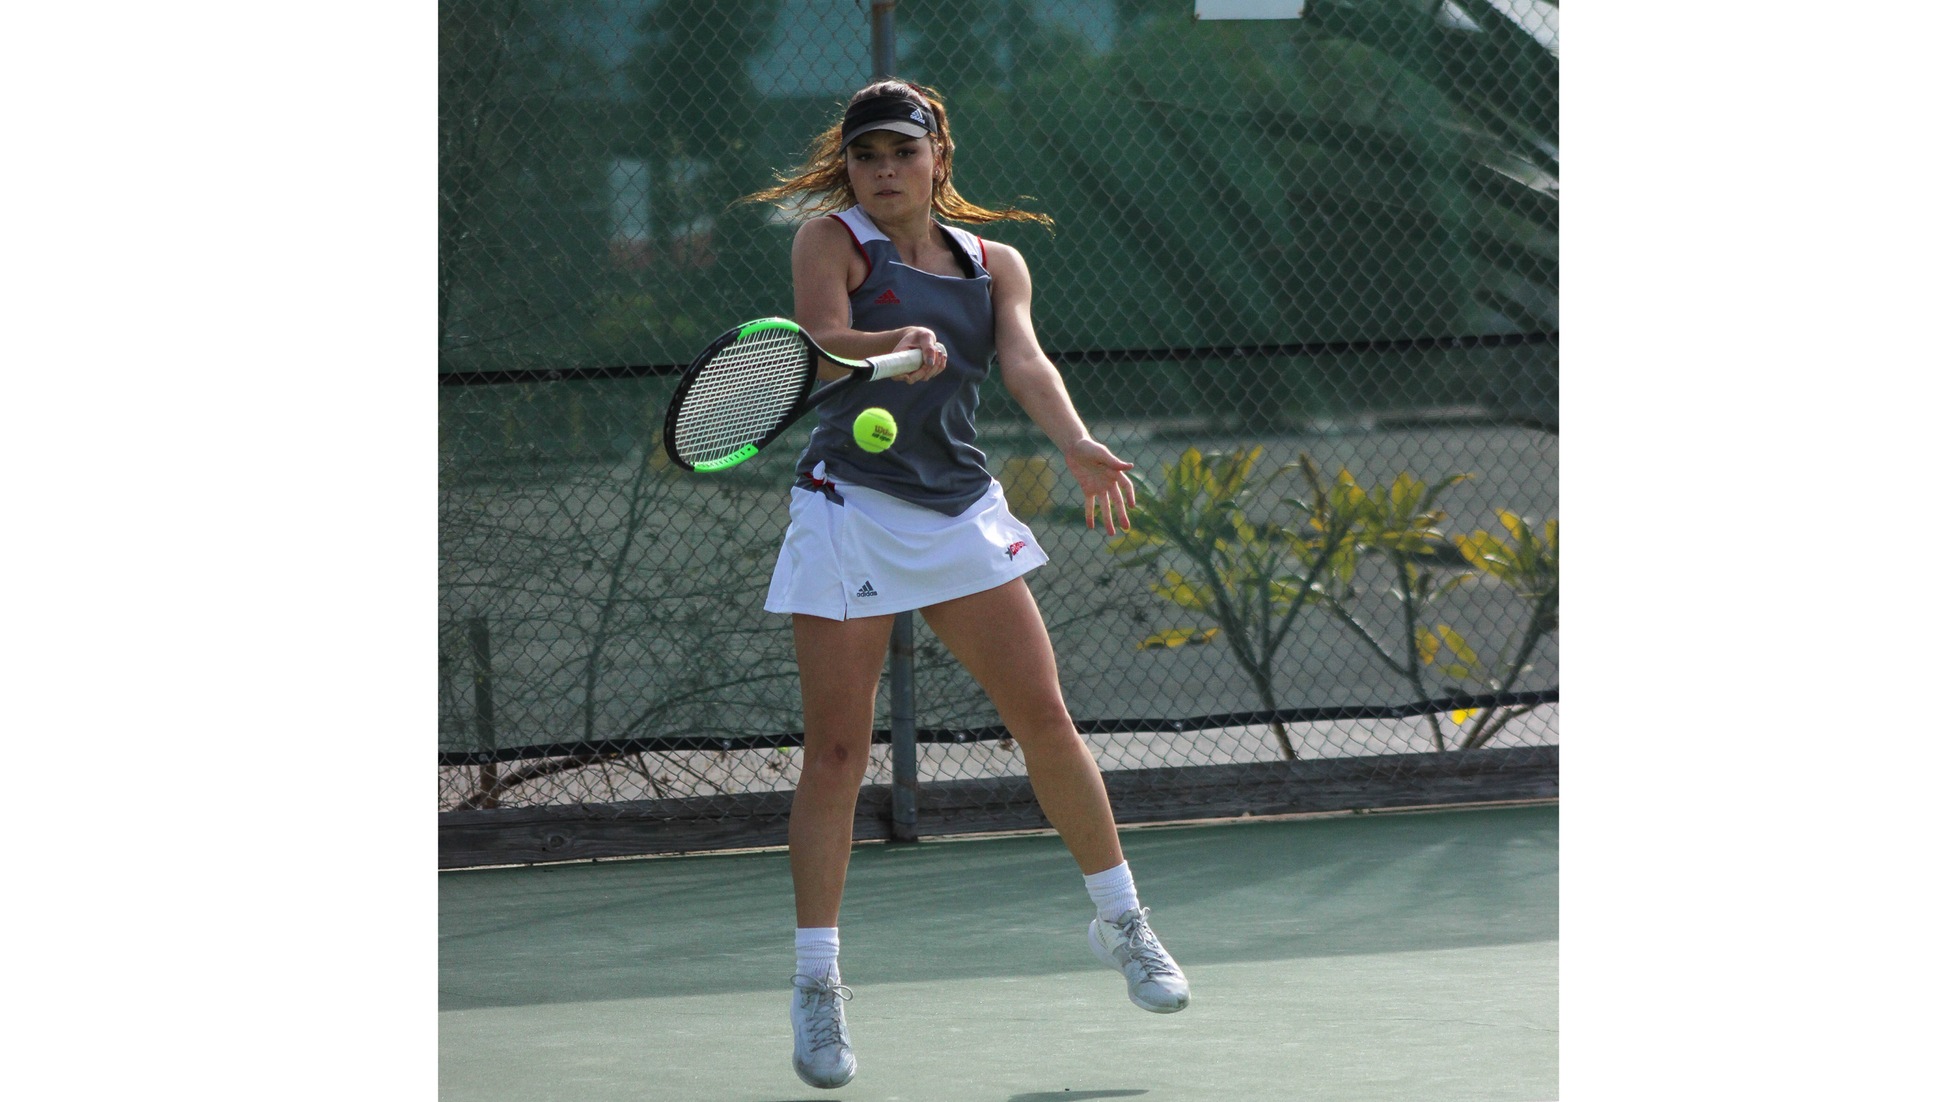 Mila Beentjes won her singles match on Thursday.